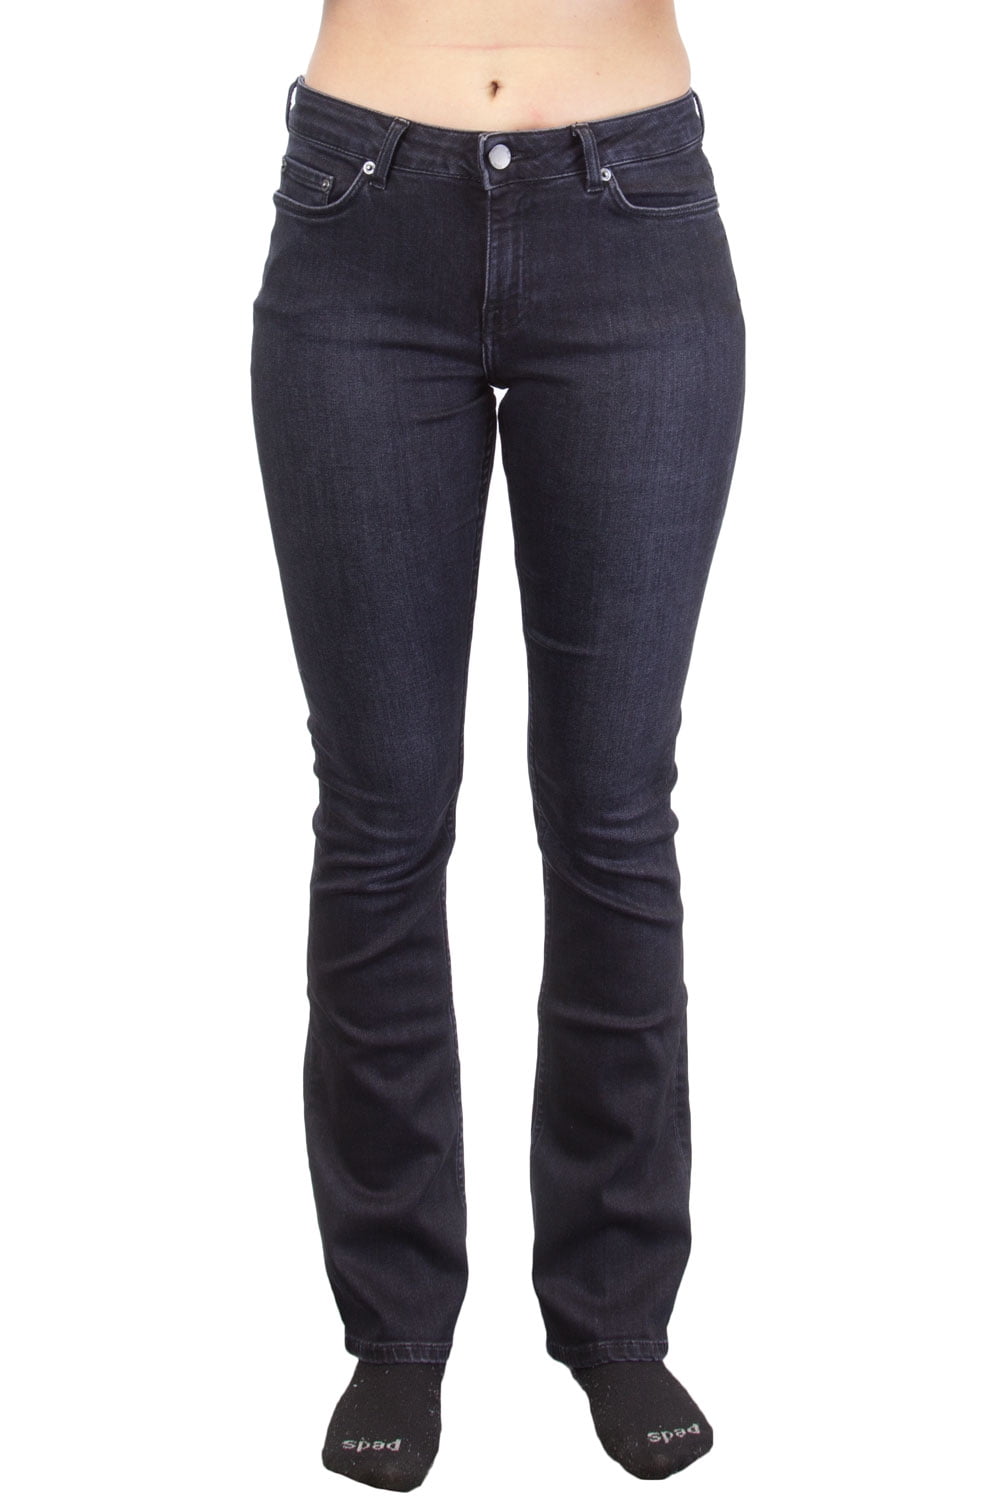 BLK DNM Women's Low Rise Bootcut Jeans, Flint Grey, 28x32 - Walmart.com